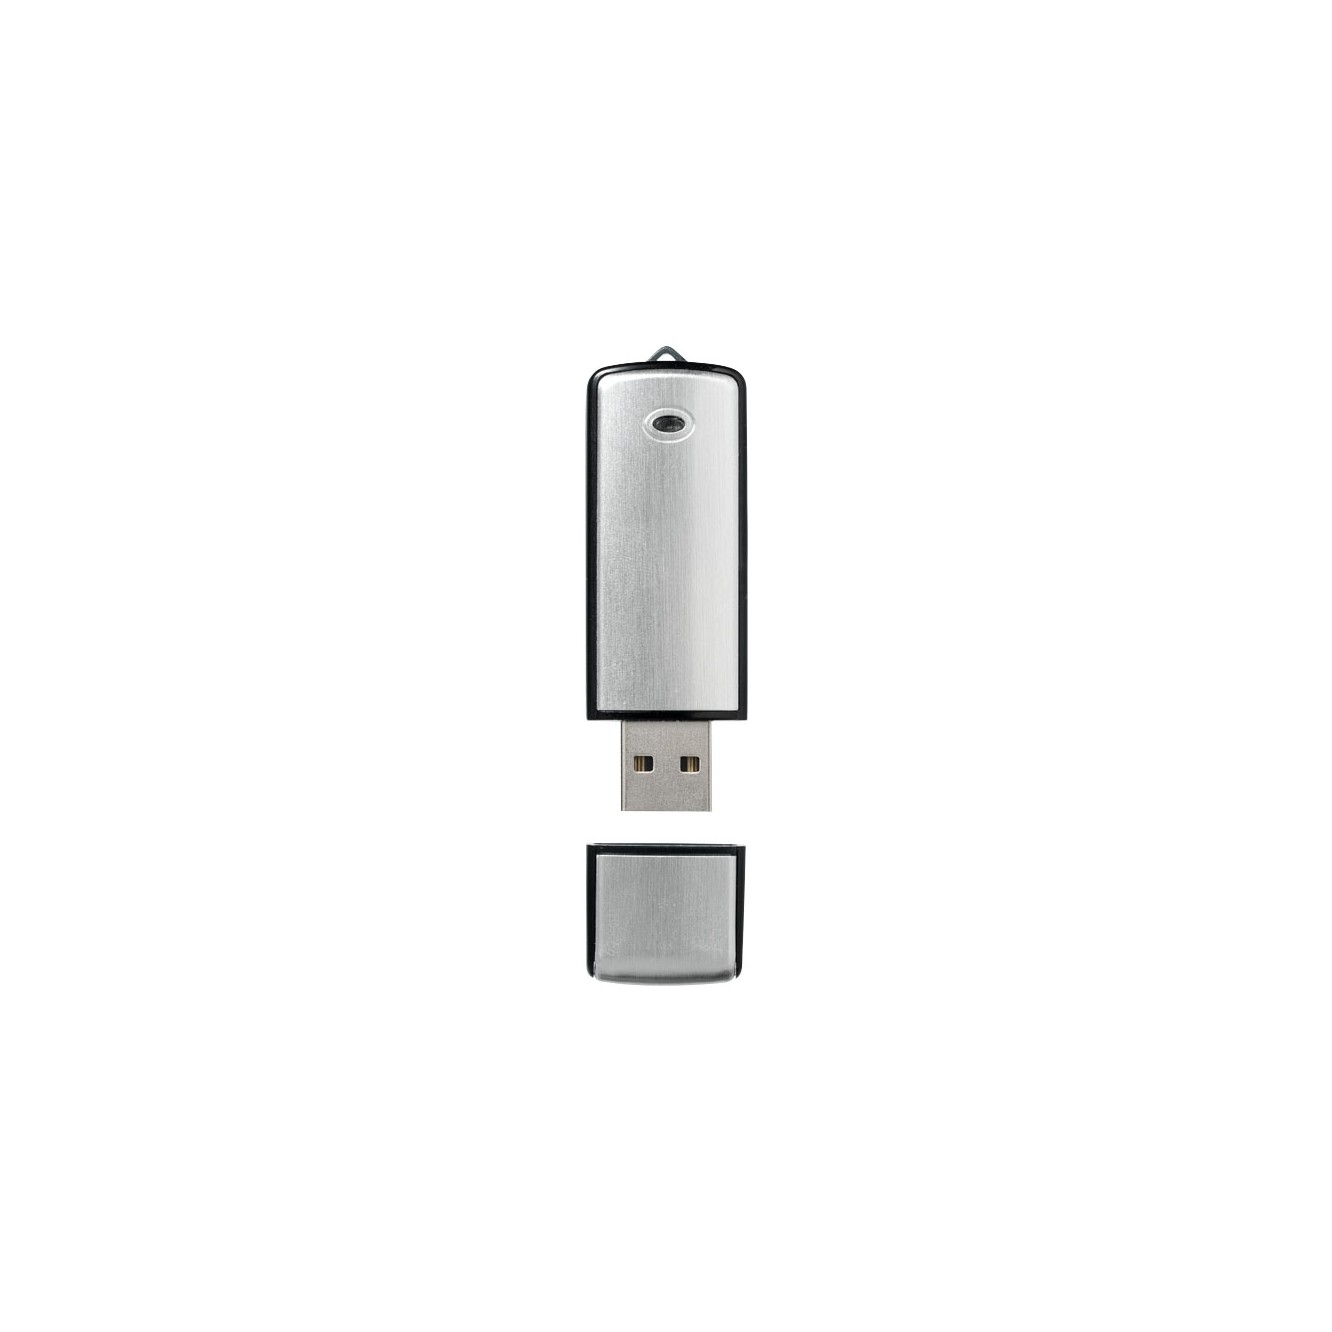 USB stick Square